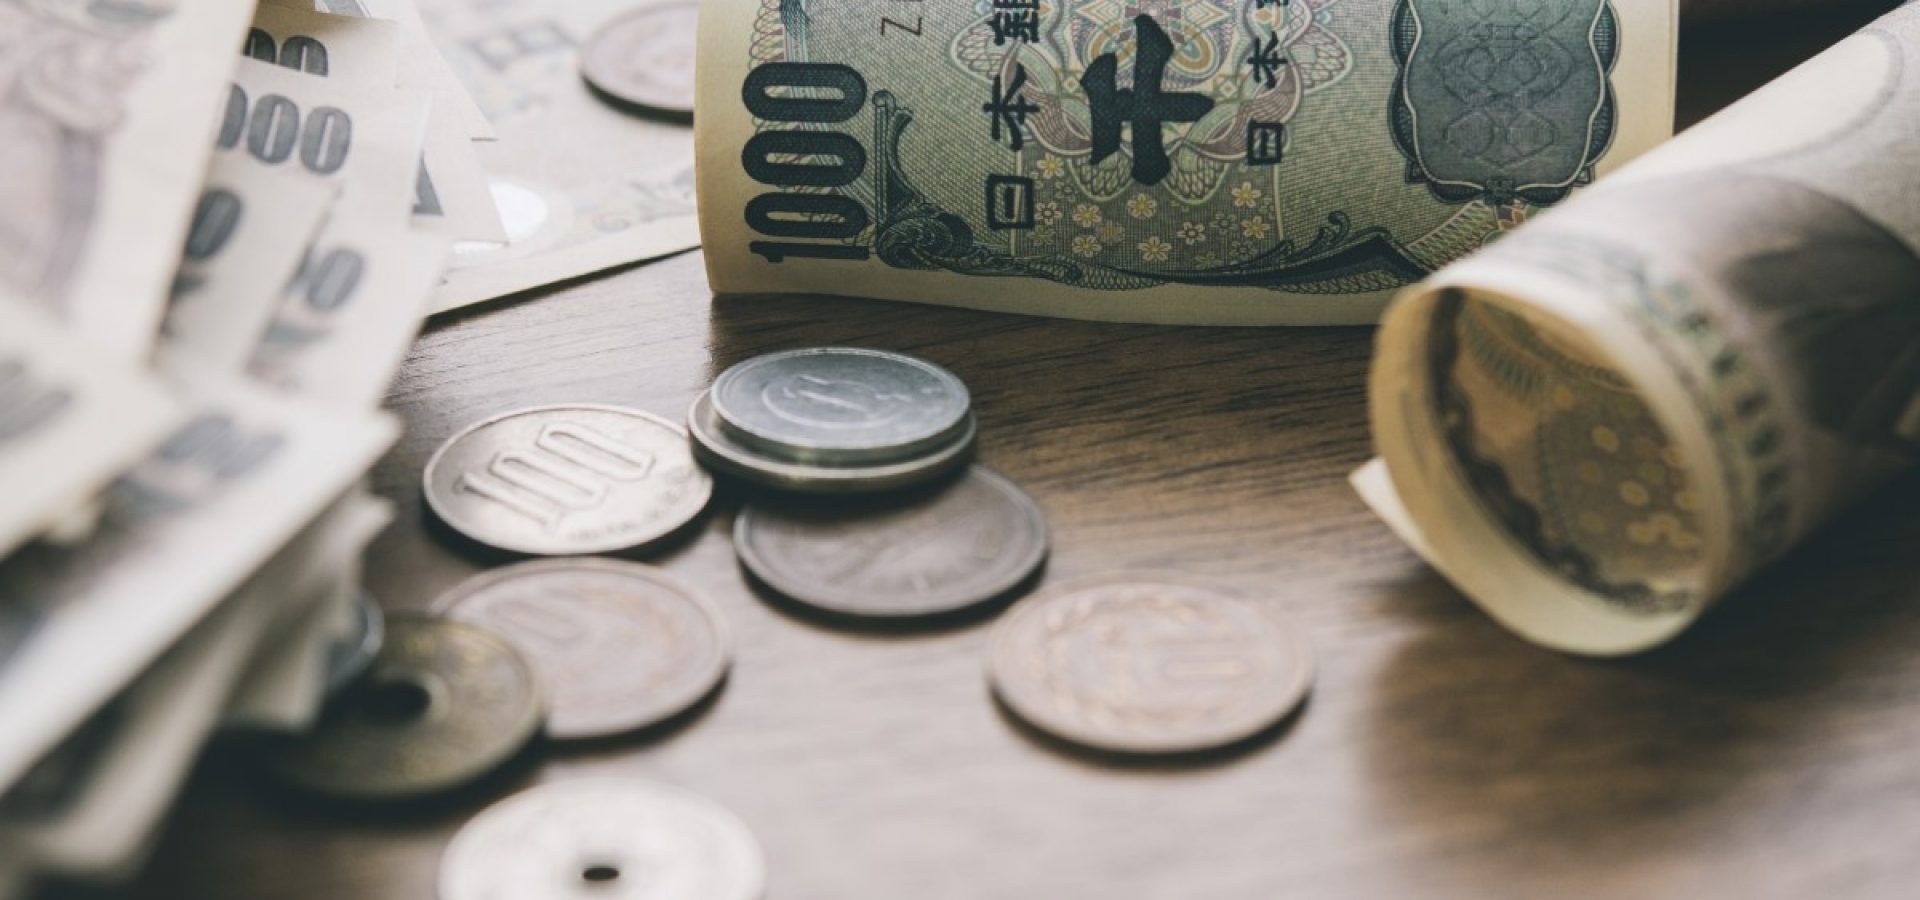 The Japanese Yen and united states dollar